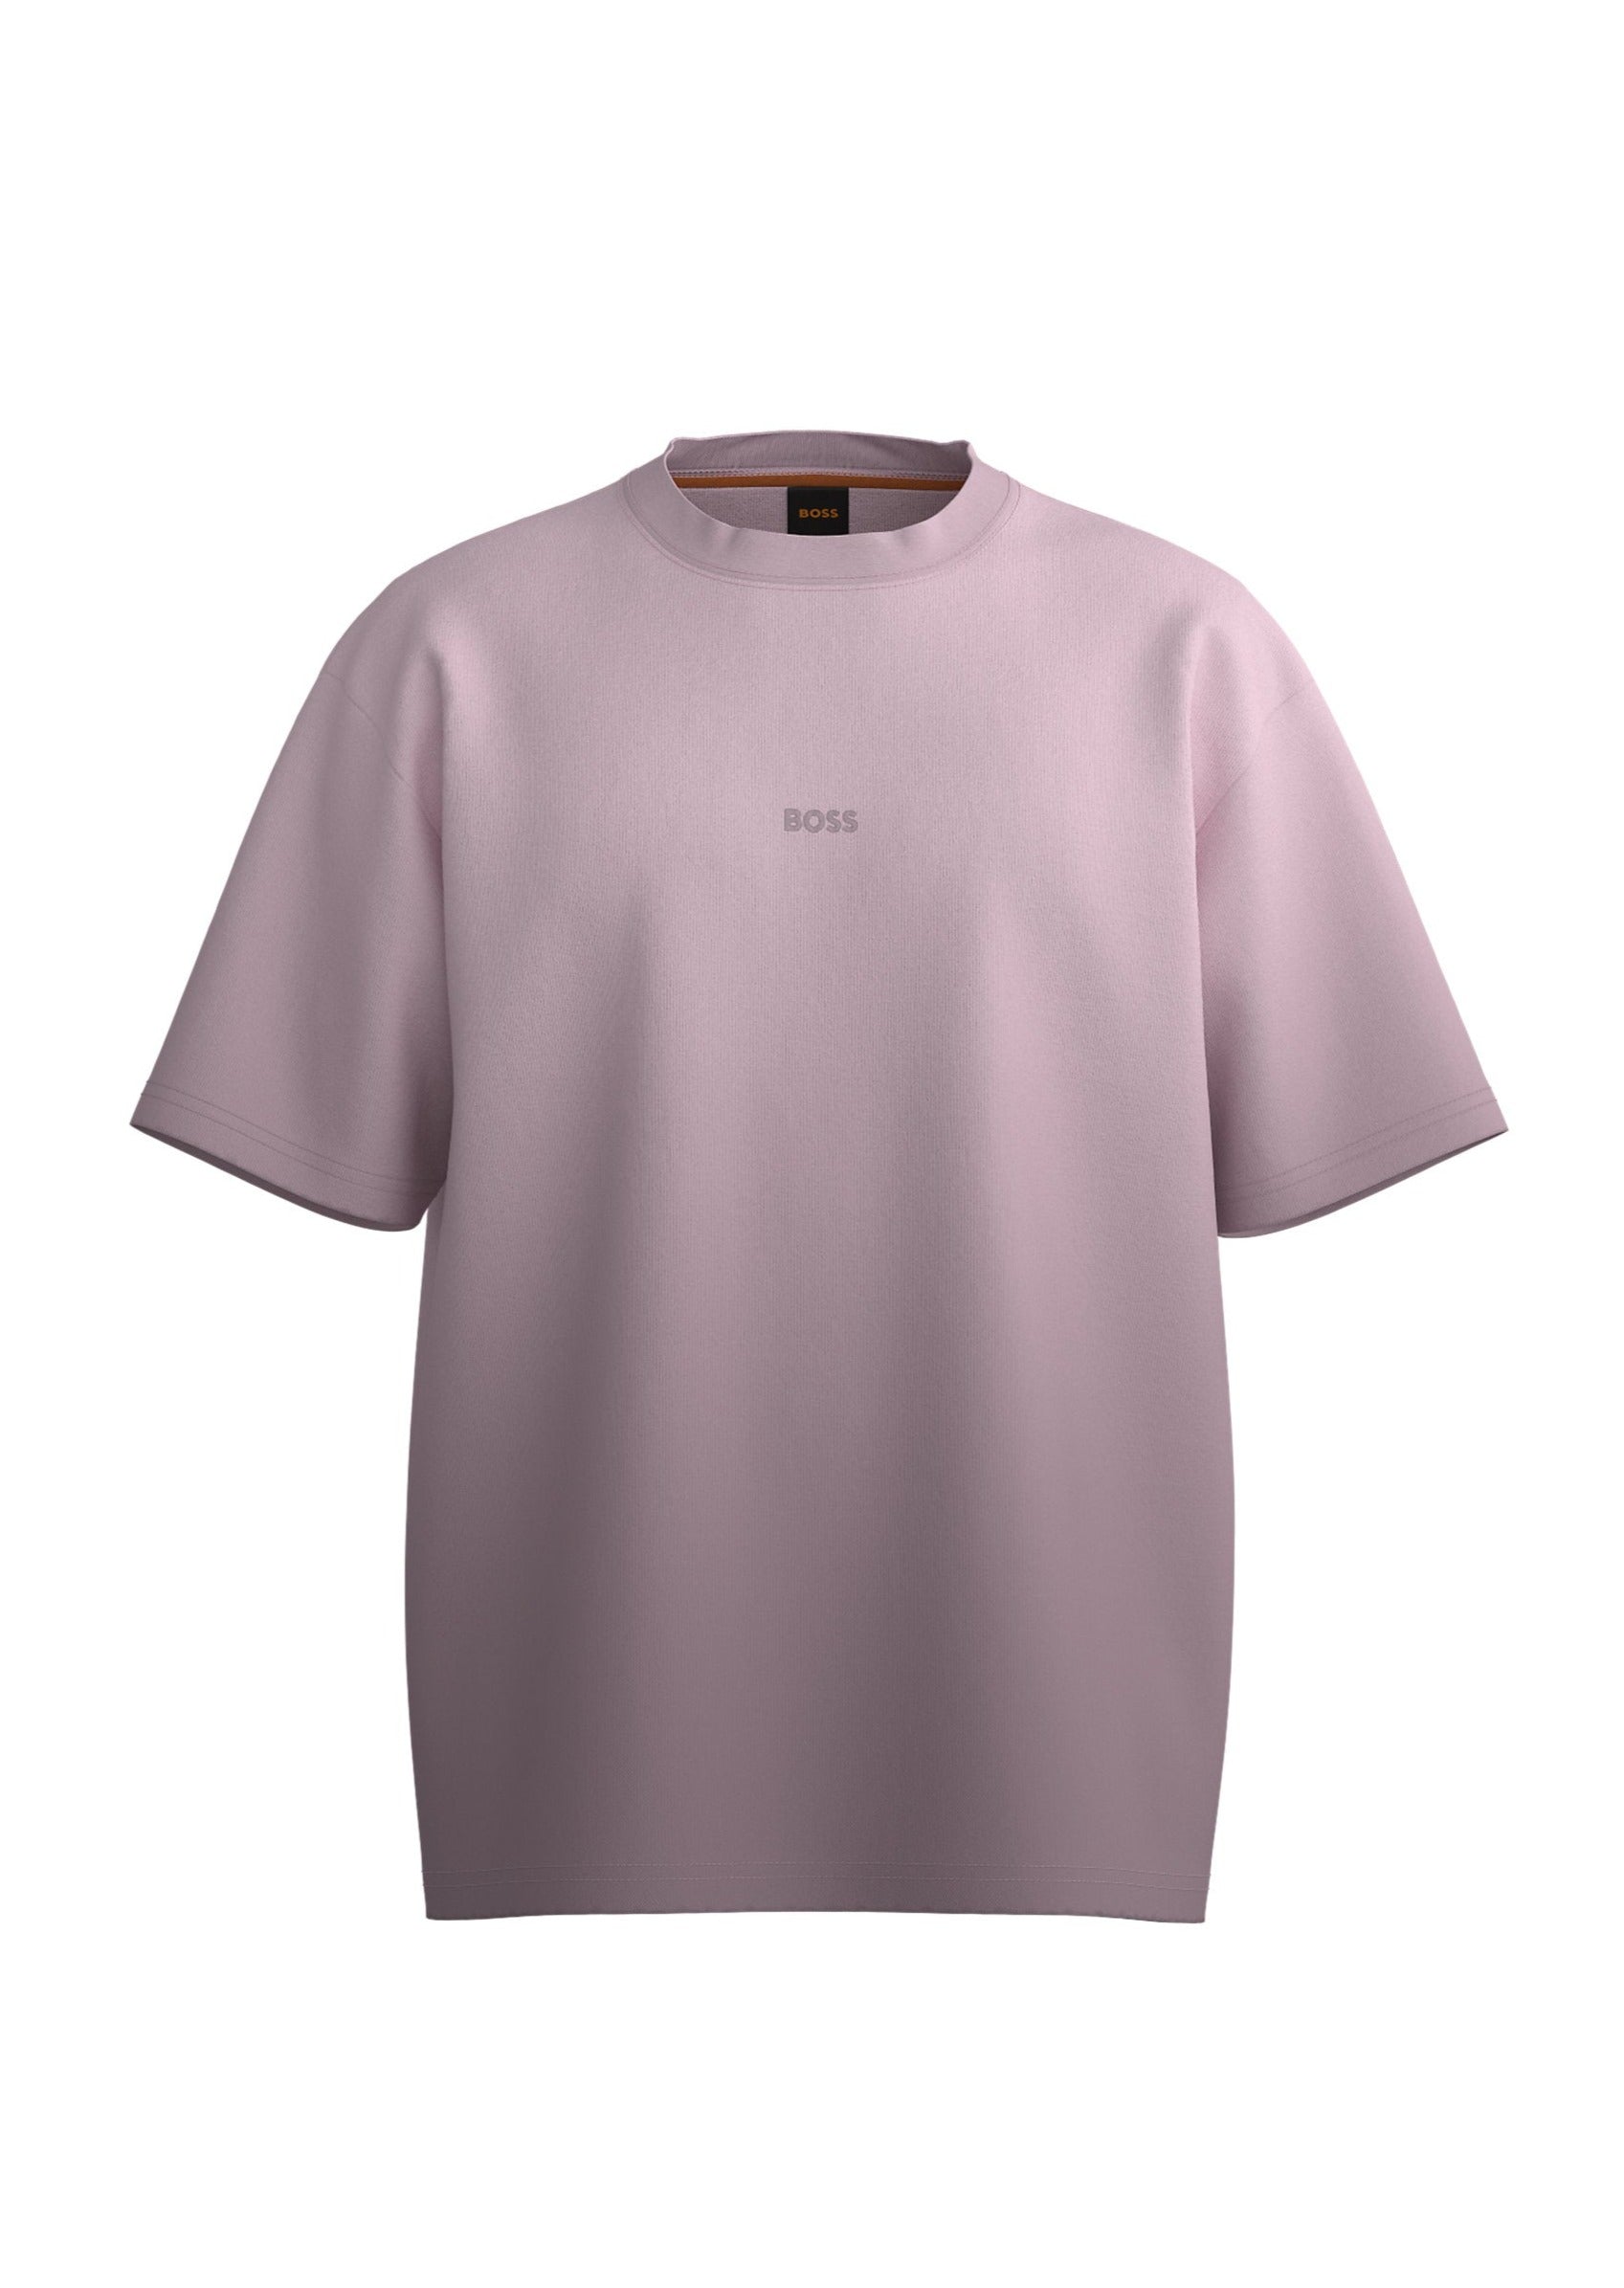 T-Shirt dégradé homme BOSS rose | Georgespaul